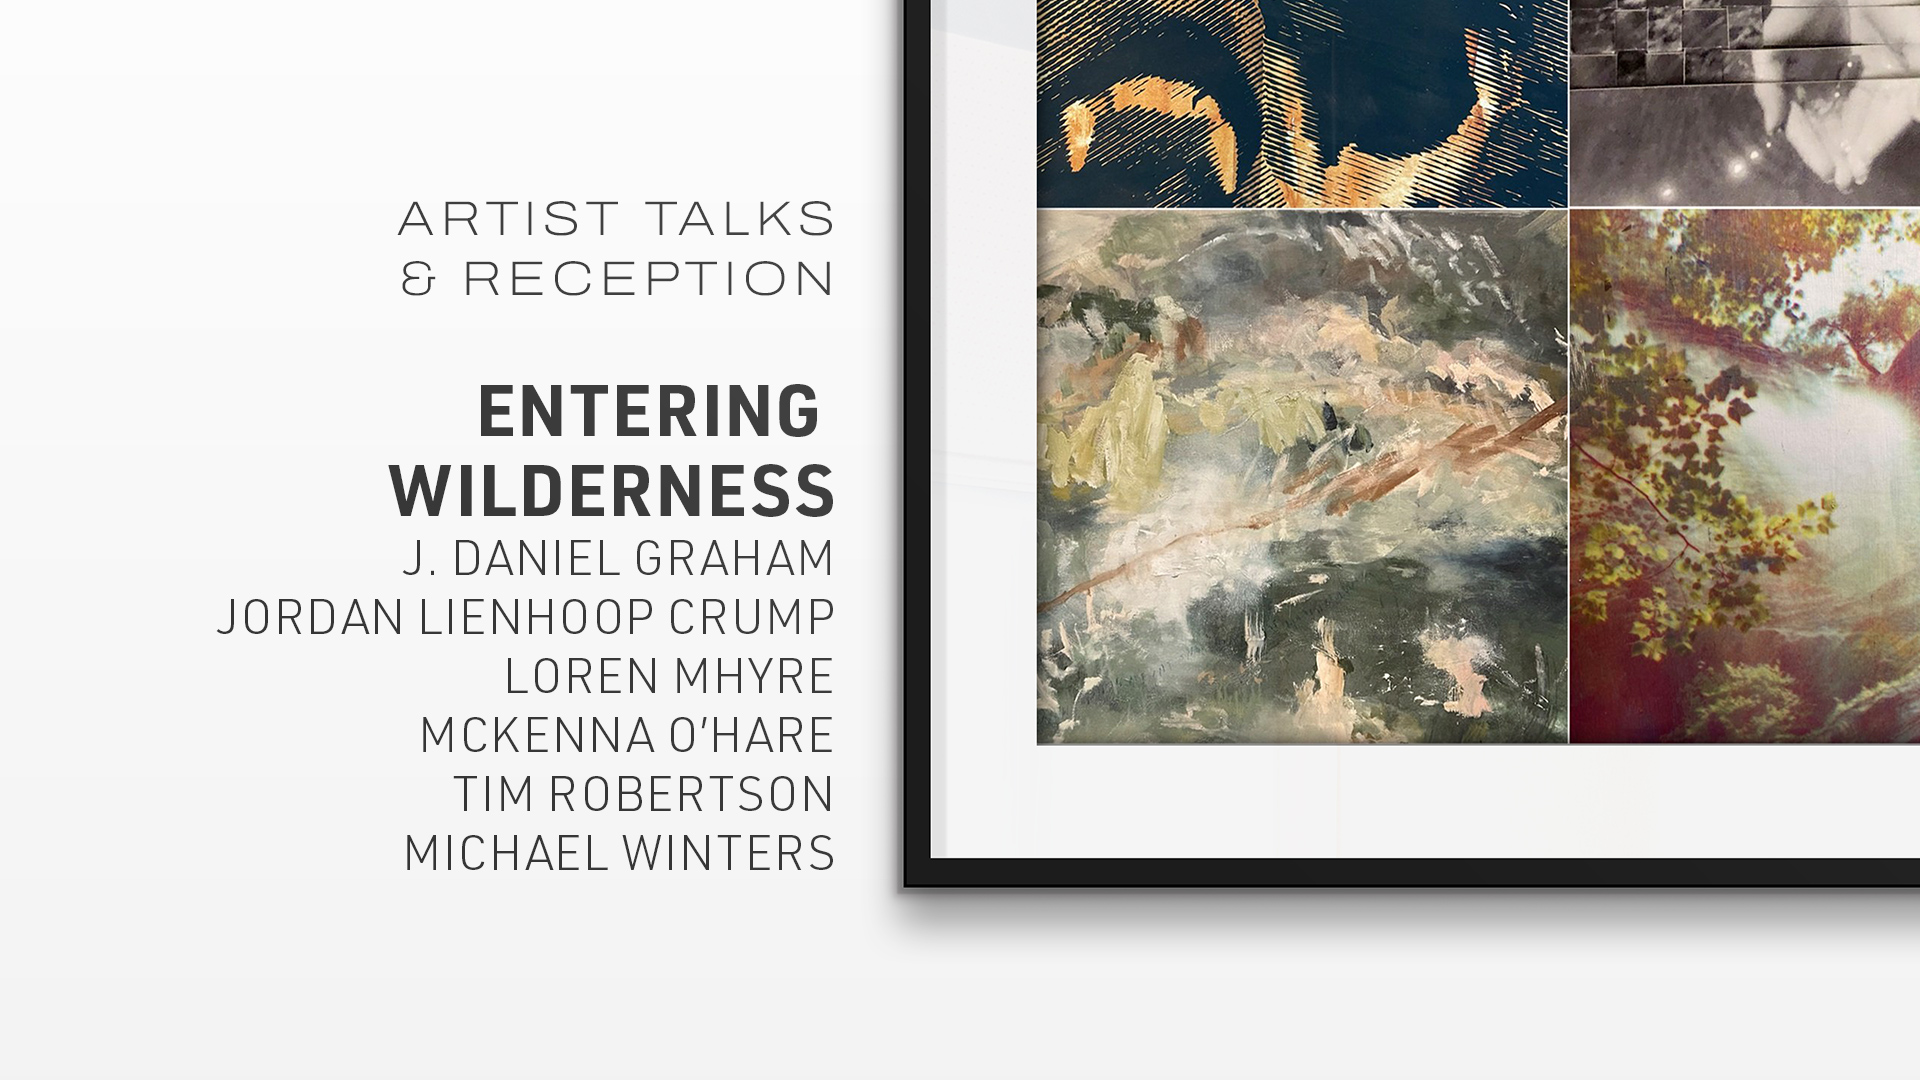 Reception & Artist Talks: Entering Wilderness